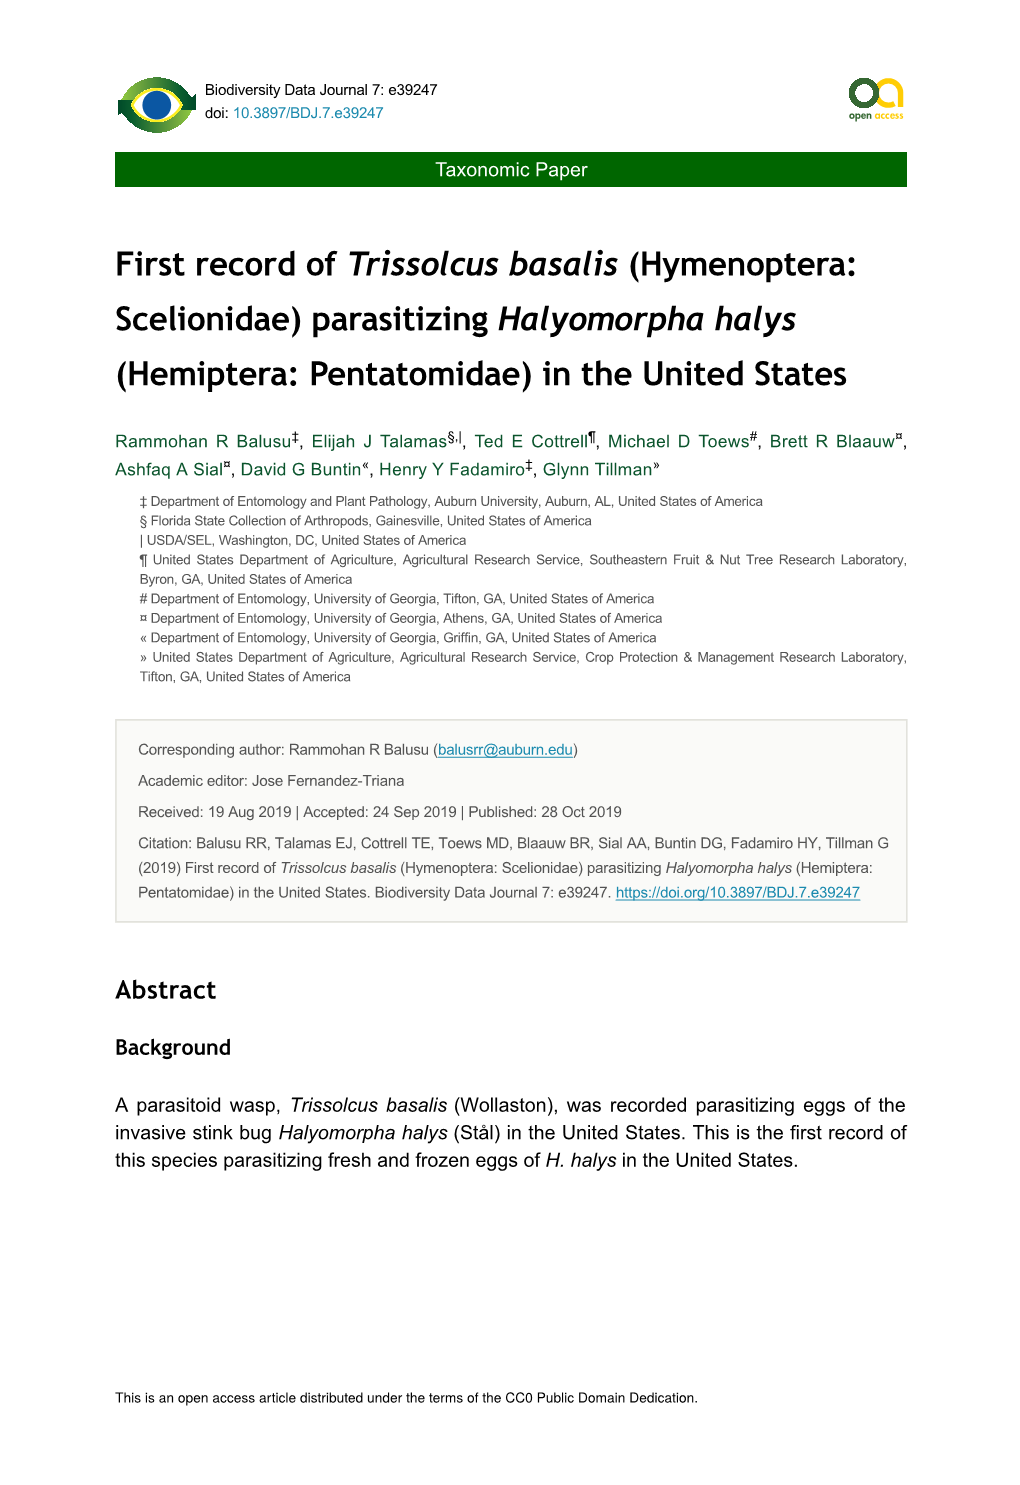 First Record of Trissolcus Basalis (Hymenoptera: Scelionidae) Parasitizing Halyomorpha Halys (Hemiptera: Pentatomidae) in the United States